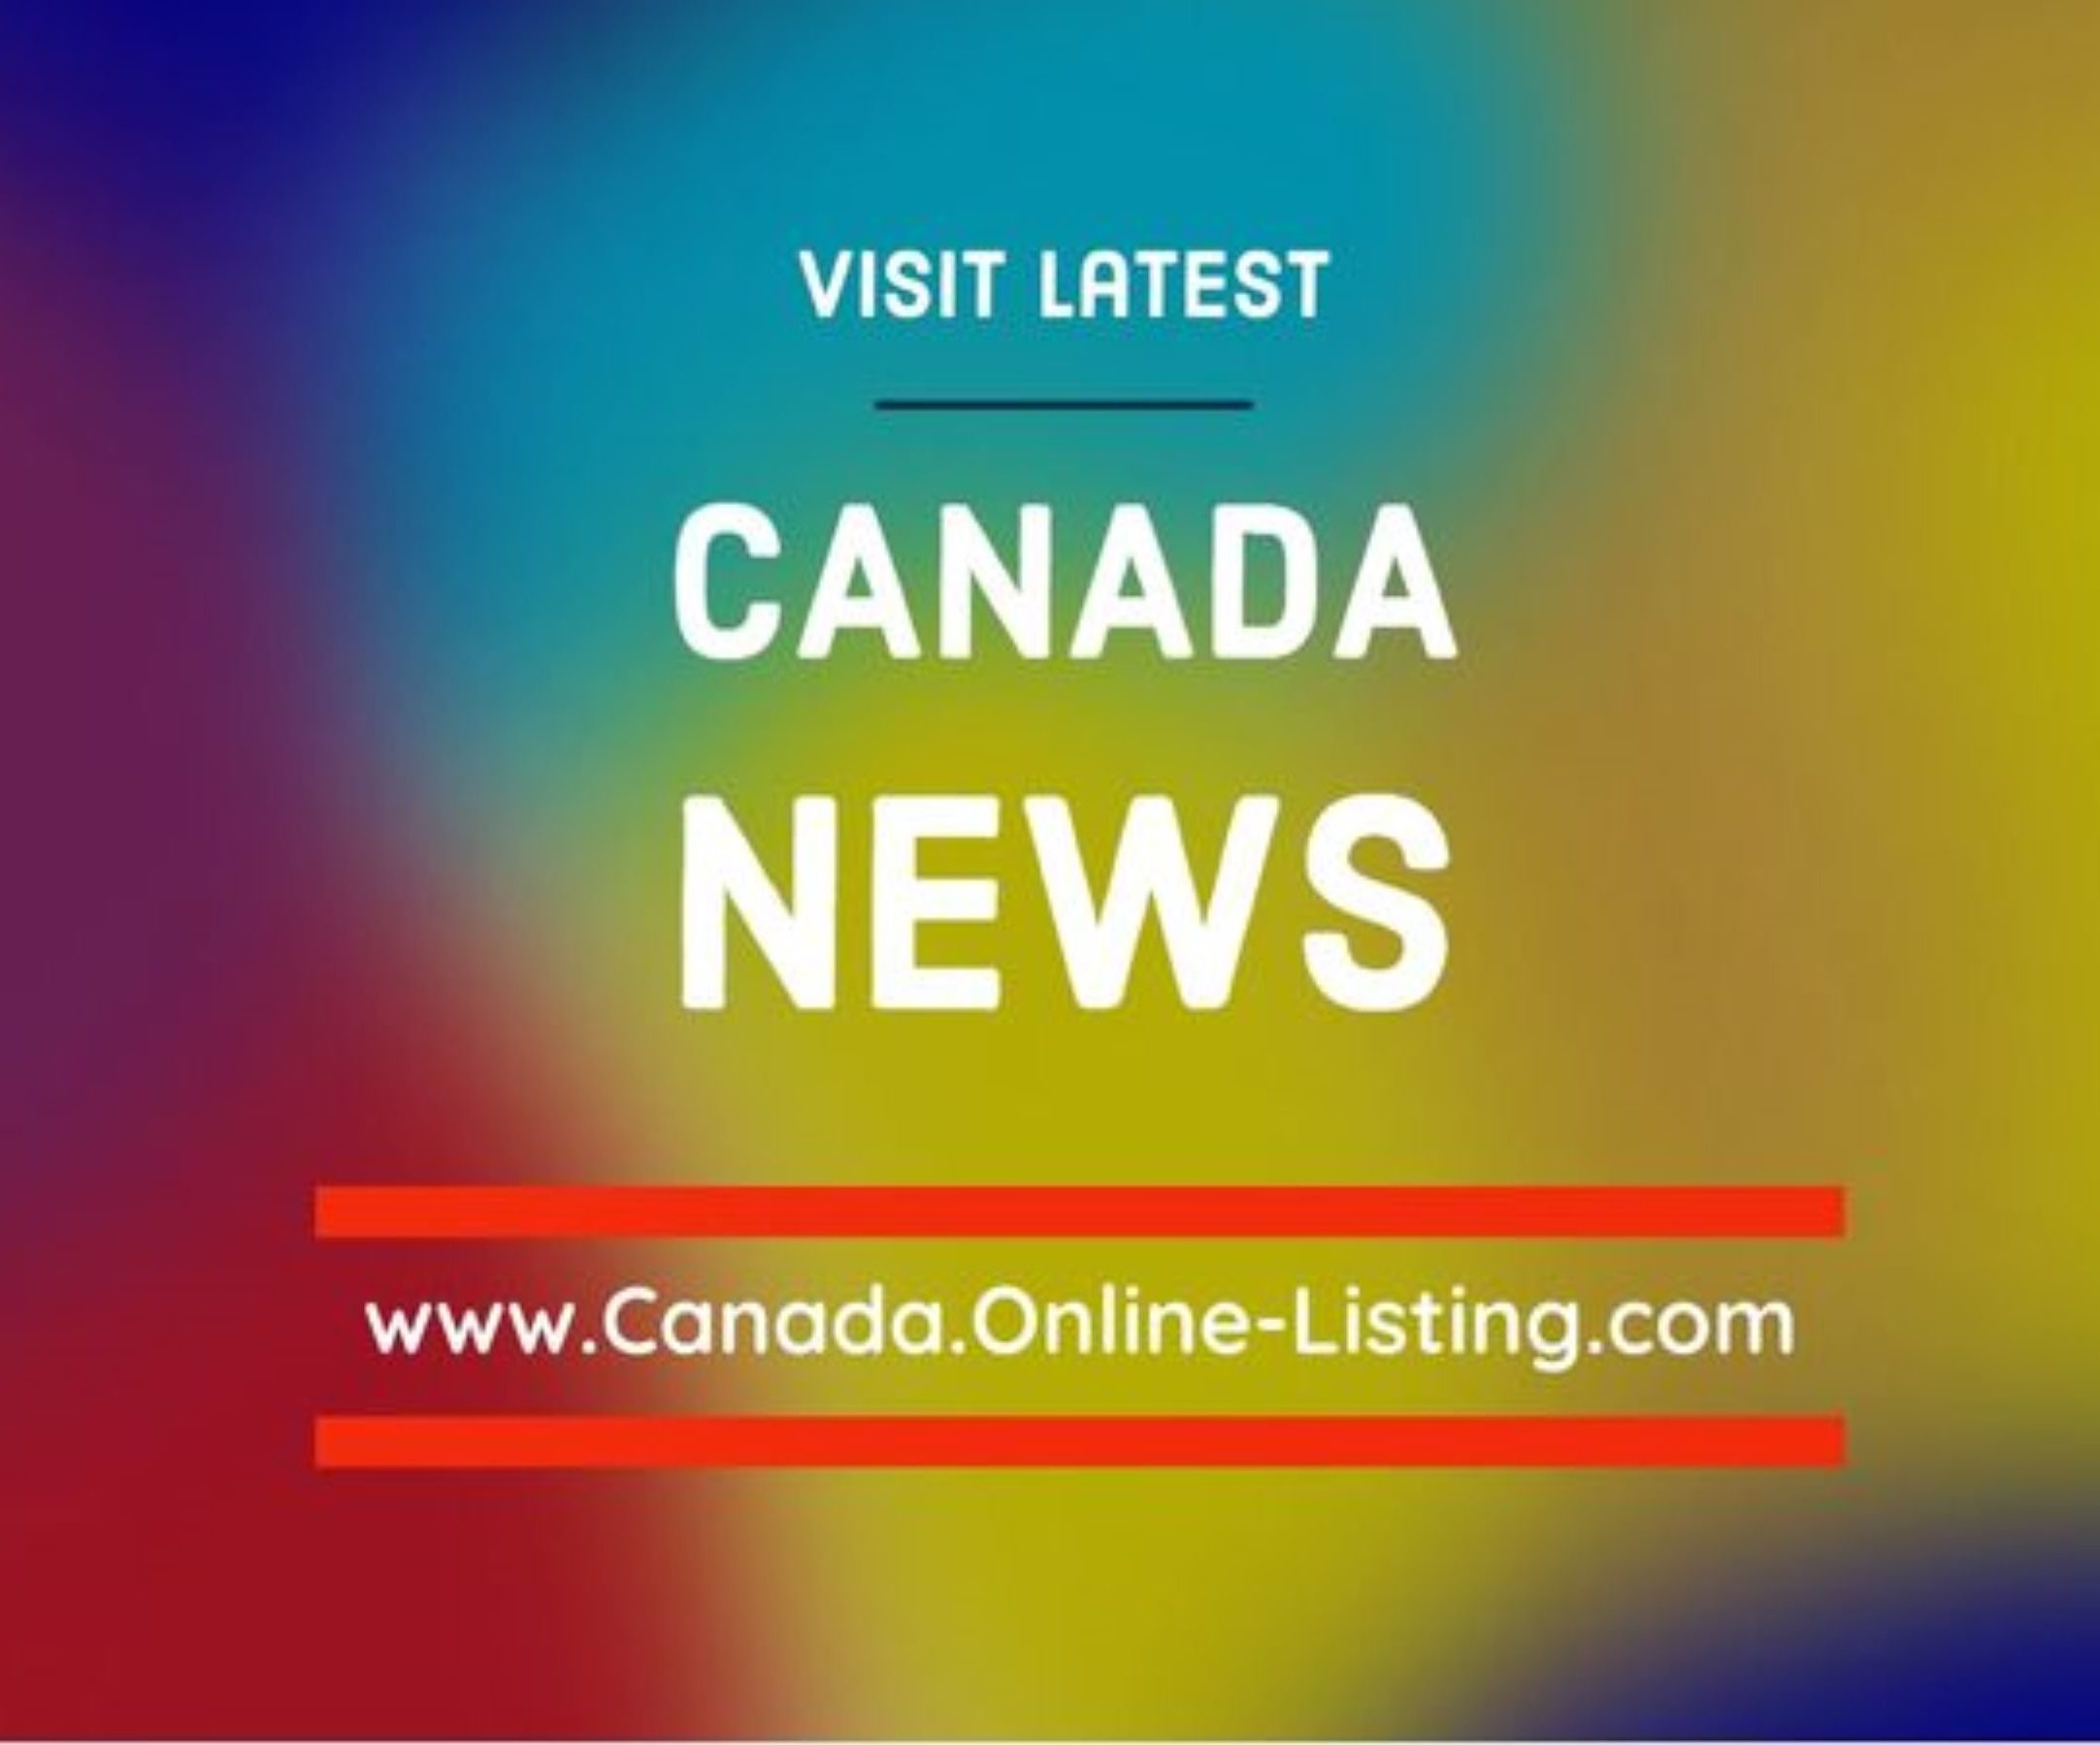 Canada Online Listing Blog News Service